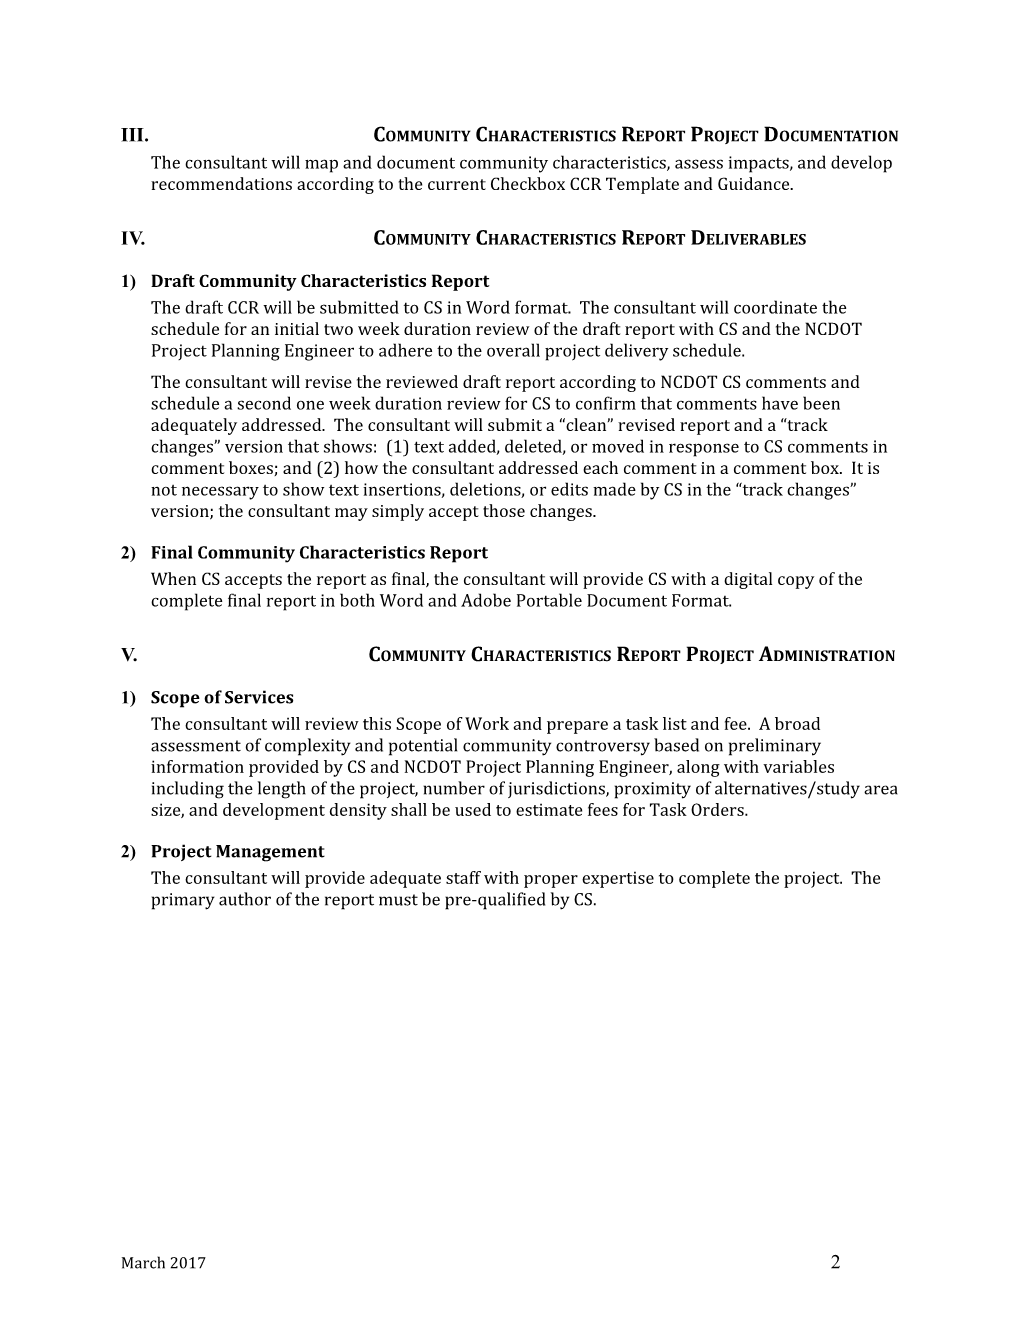 Checkboxcommunity Characteristics Report (CCR)